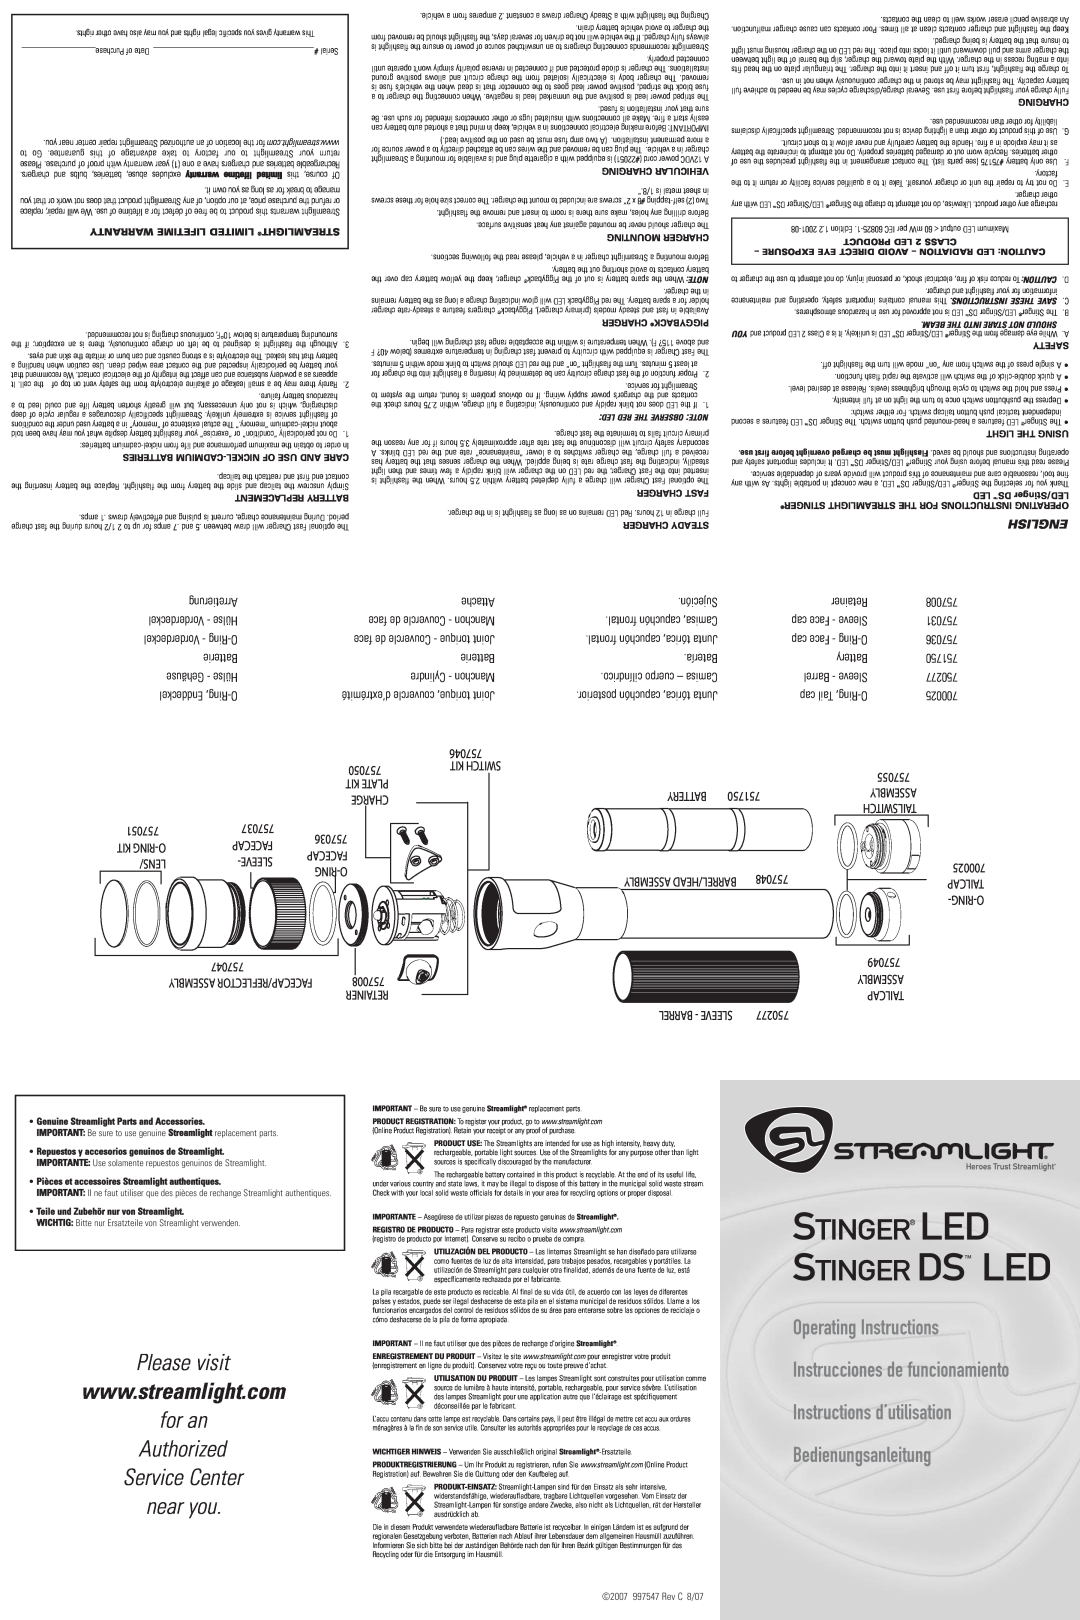 StreamLight 757048, 757055, 757049 operating instructions Stinger Led Stinger Ds Led, Please visit, for an Authorized 